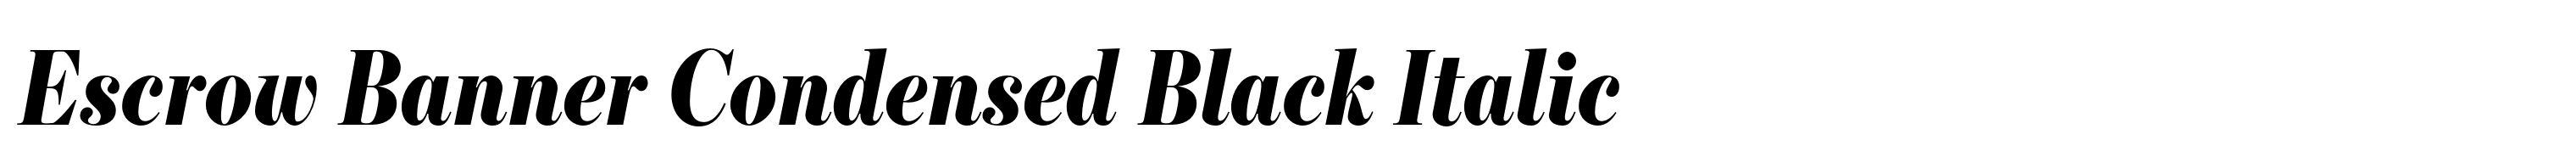 Escrow Banner Condensed Black Italic